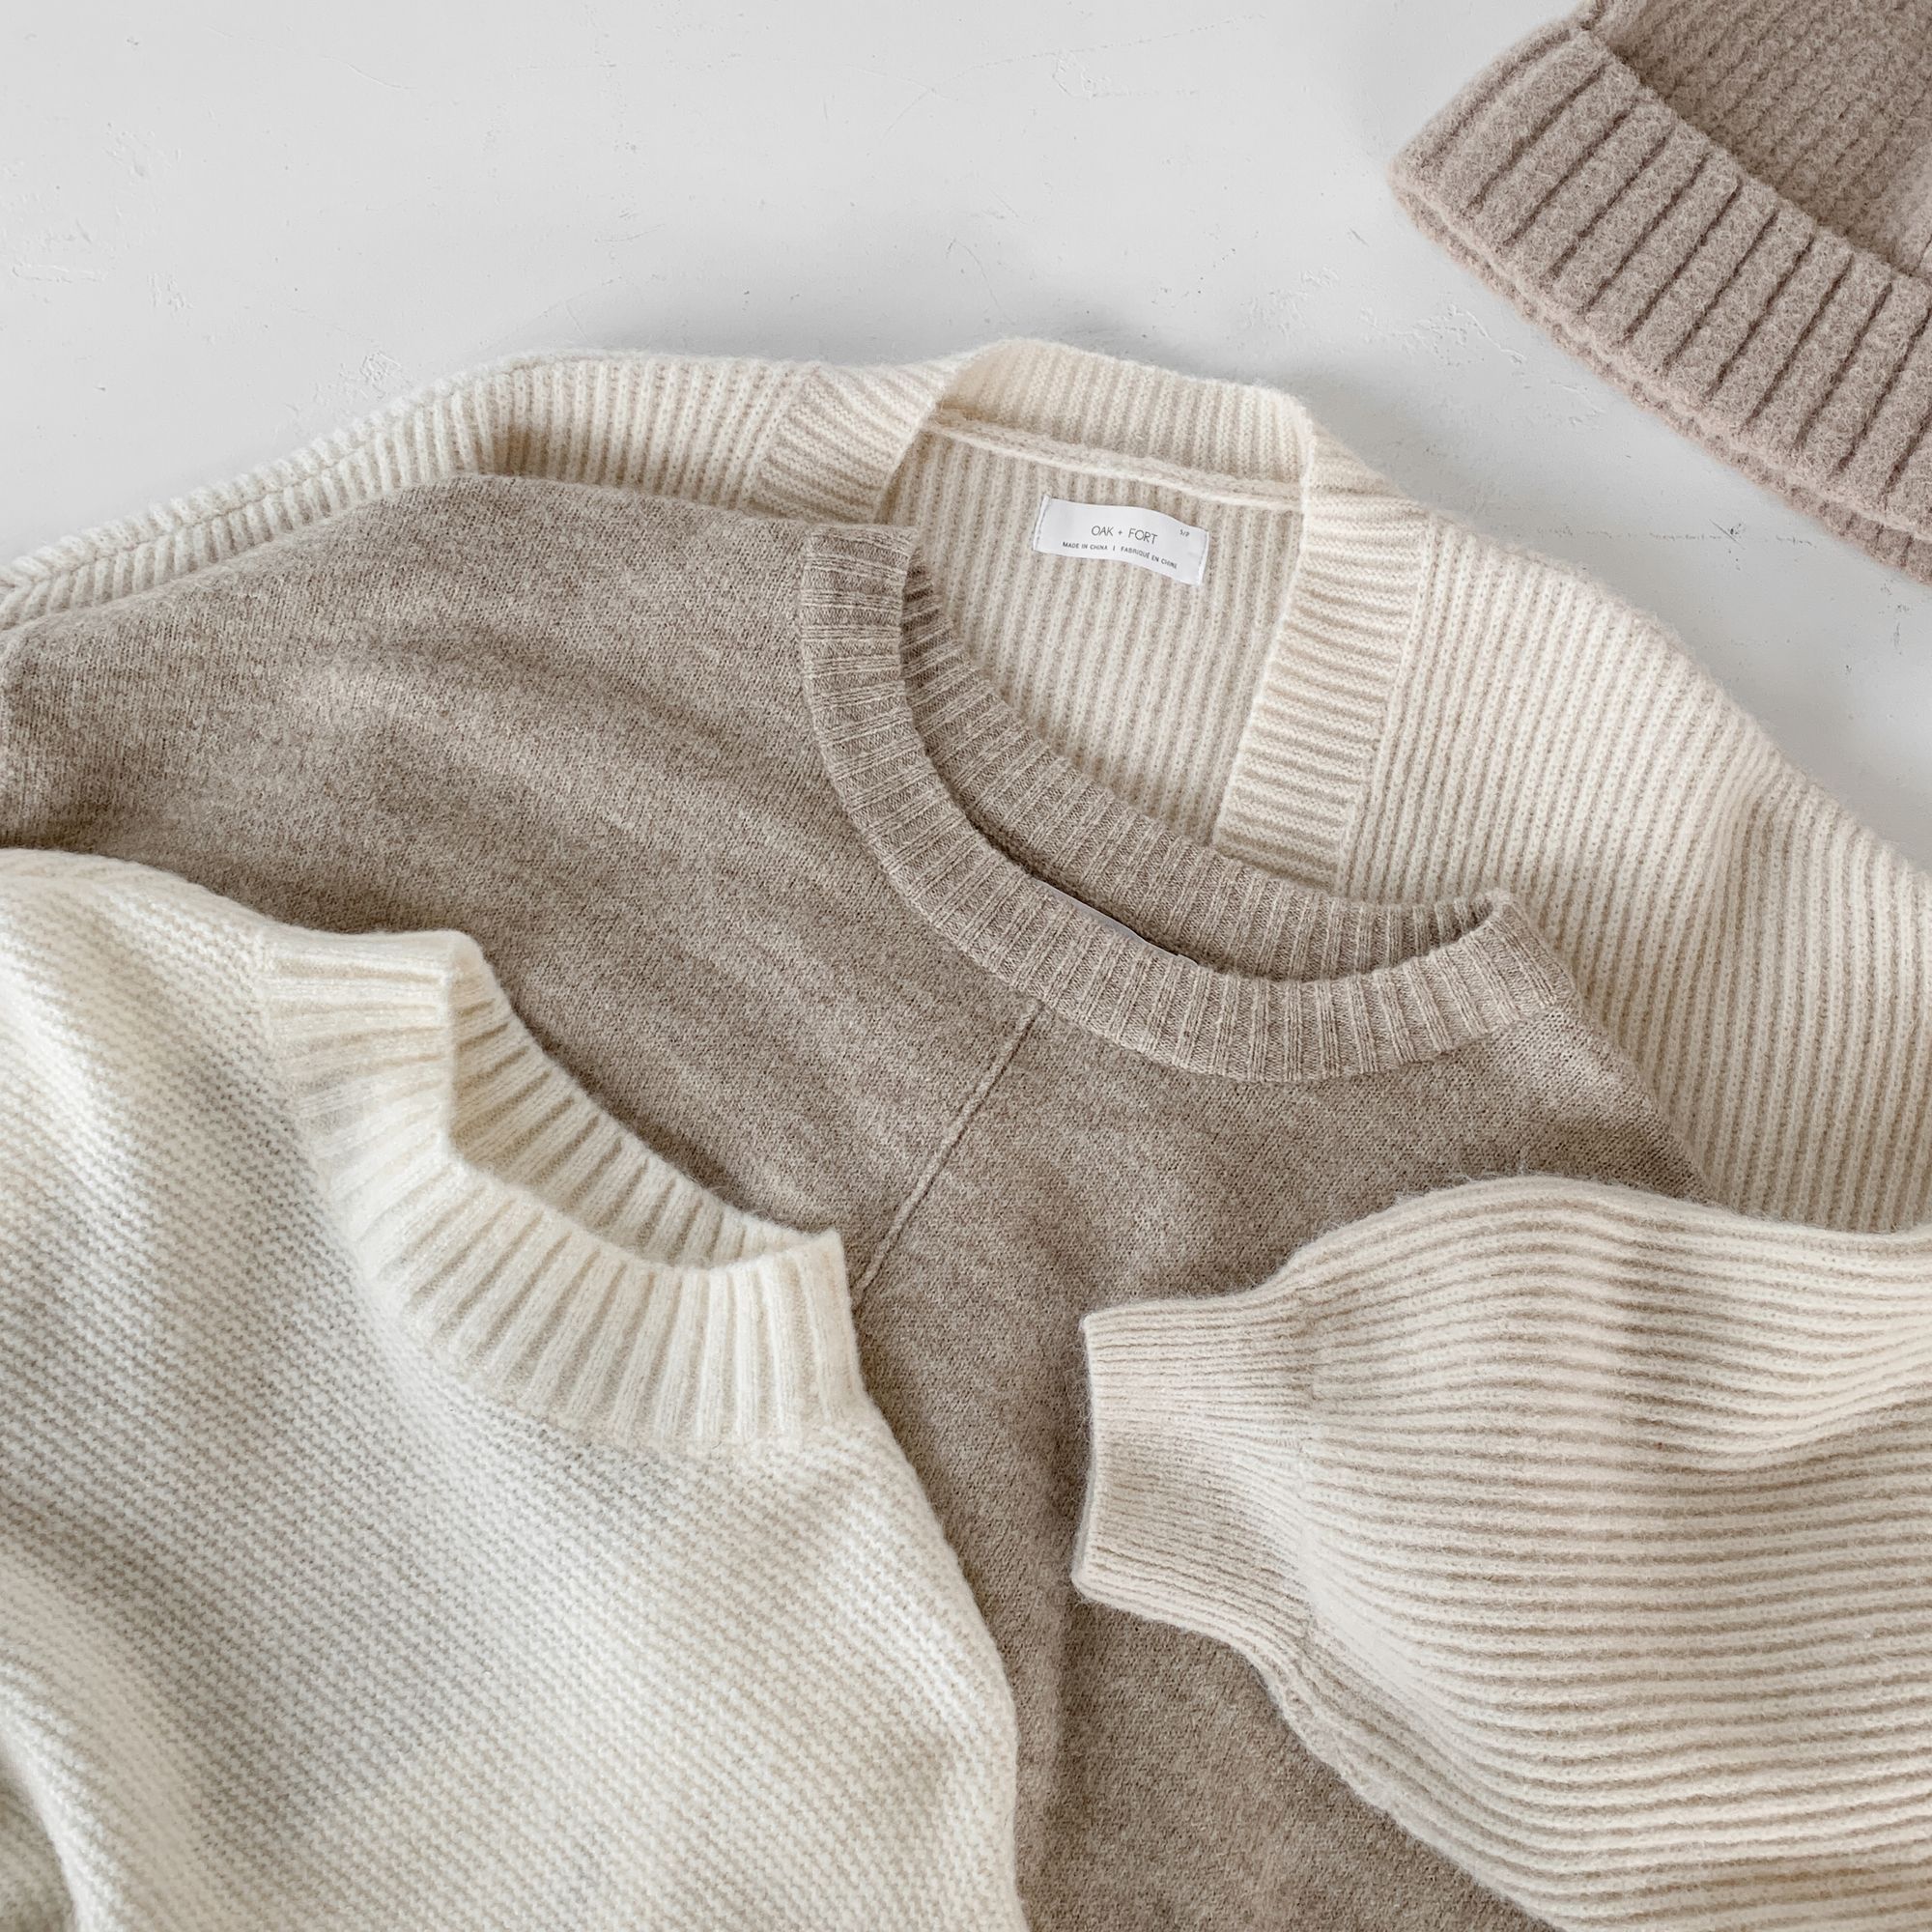 15 style Winter sweater ideas